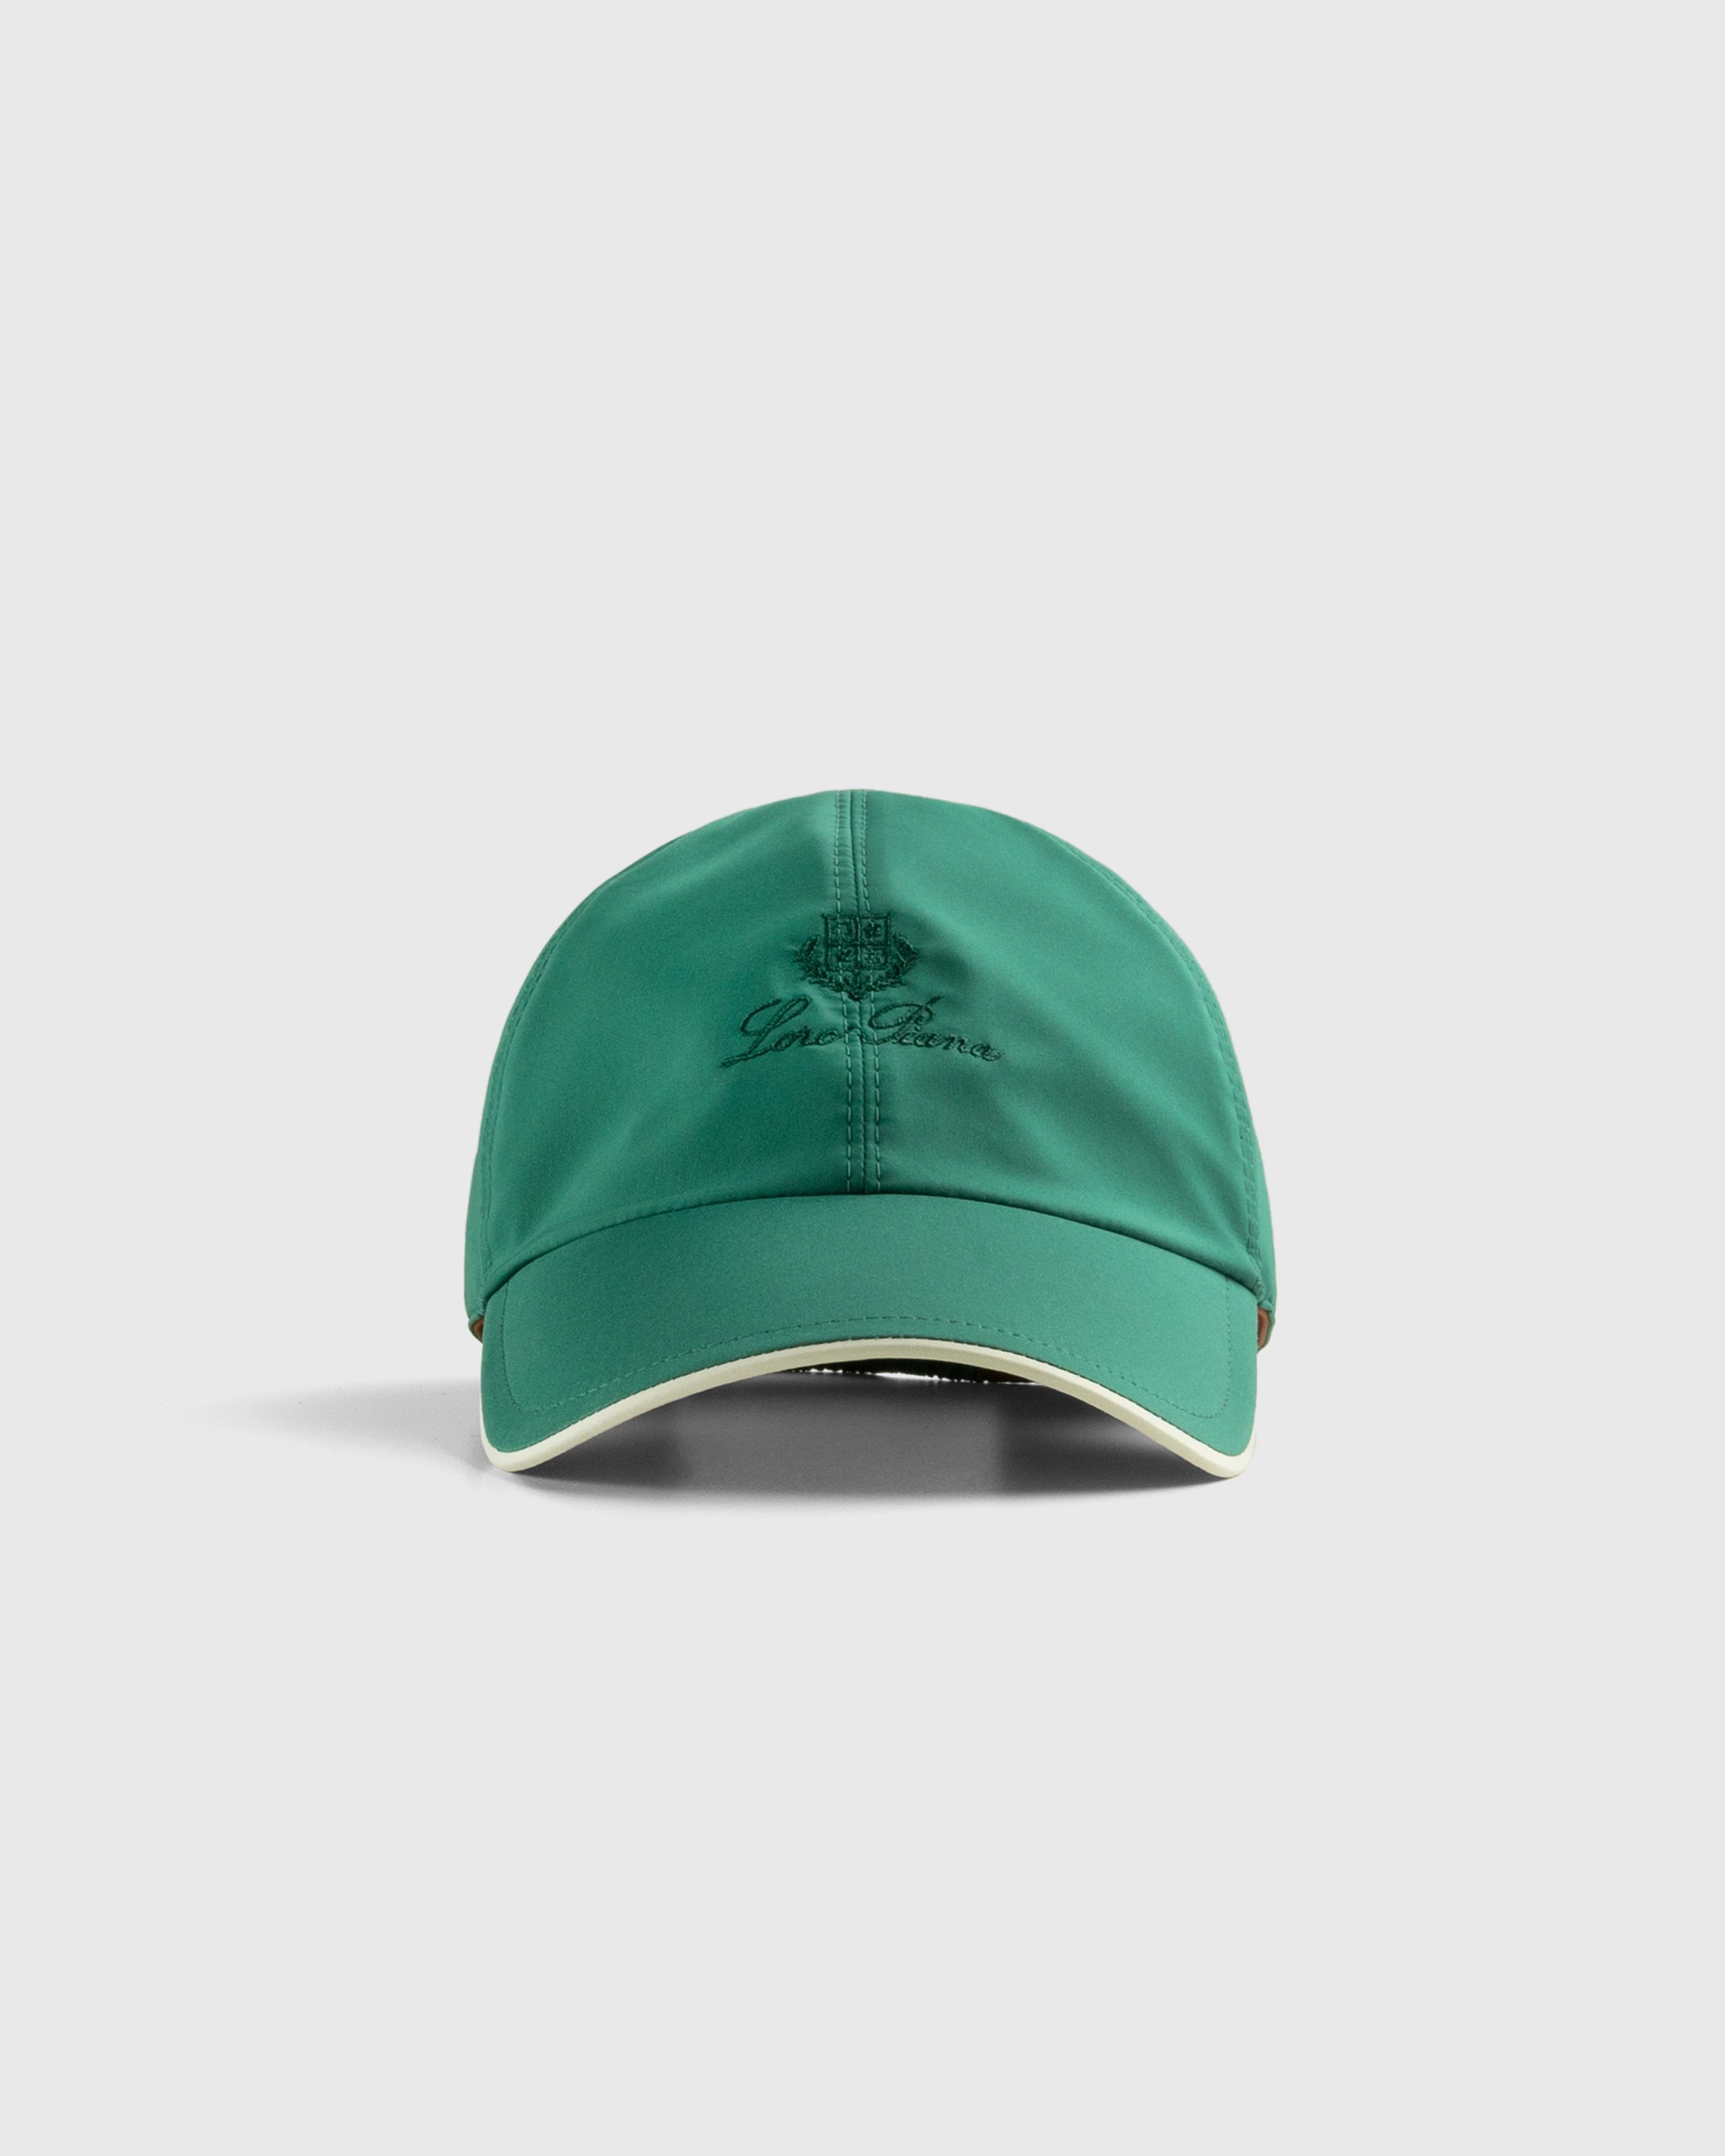 Loro Piana - Bicolor Baseball Cap Green Mint / Ivory - Accessories - Green - Image 2